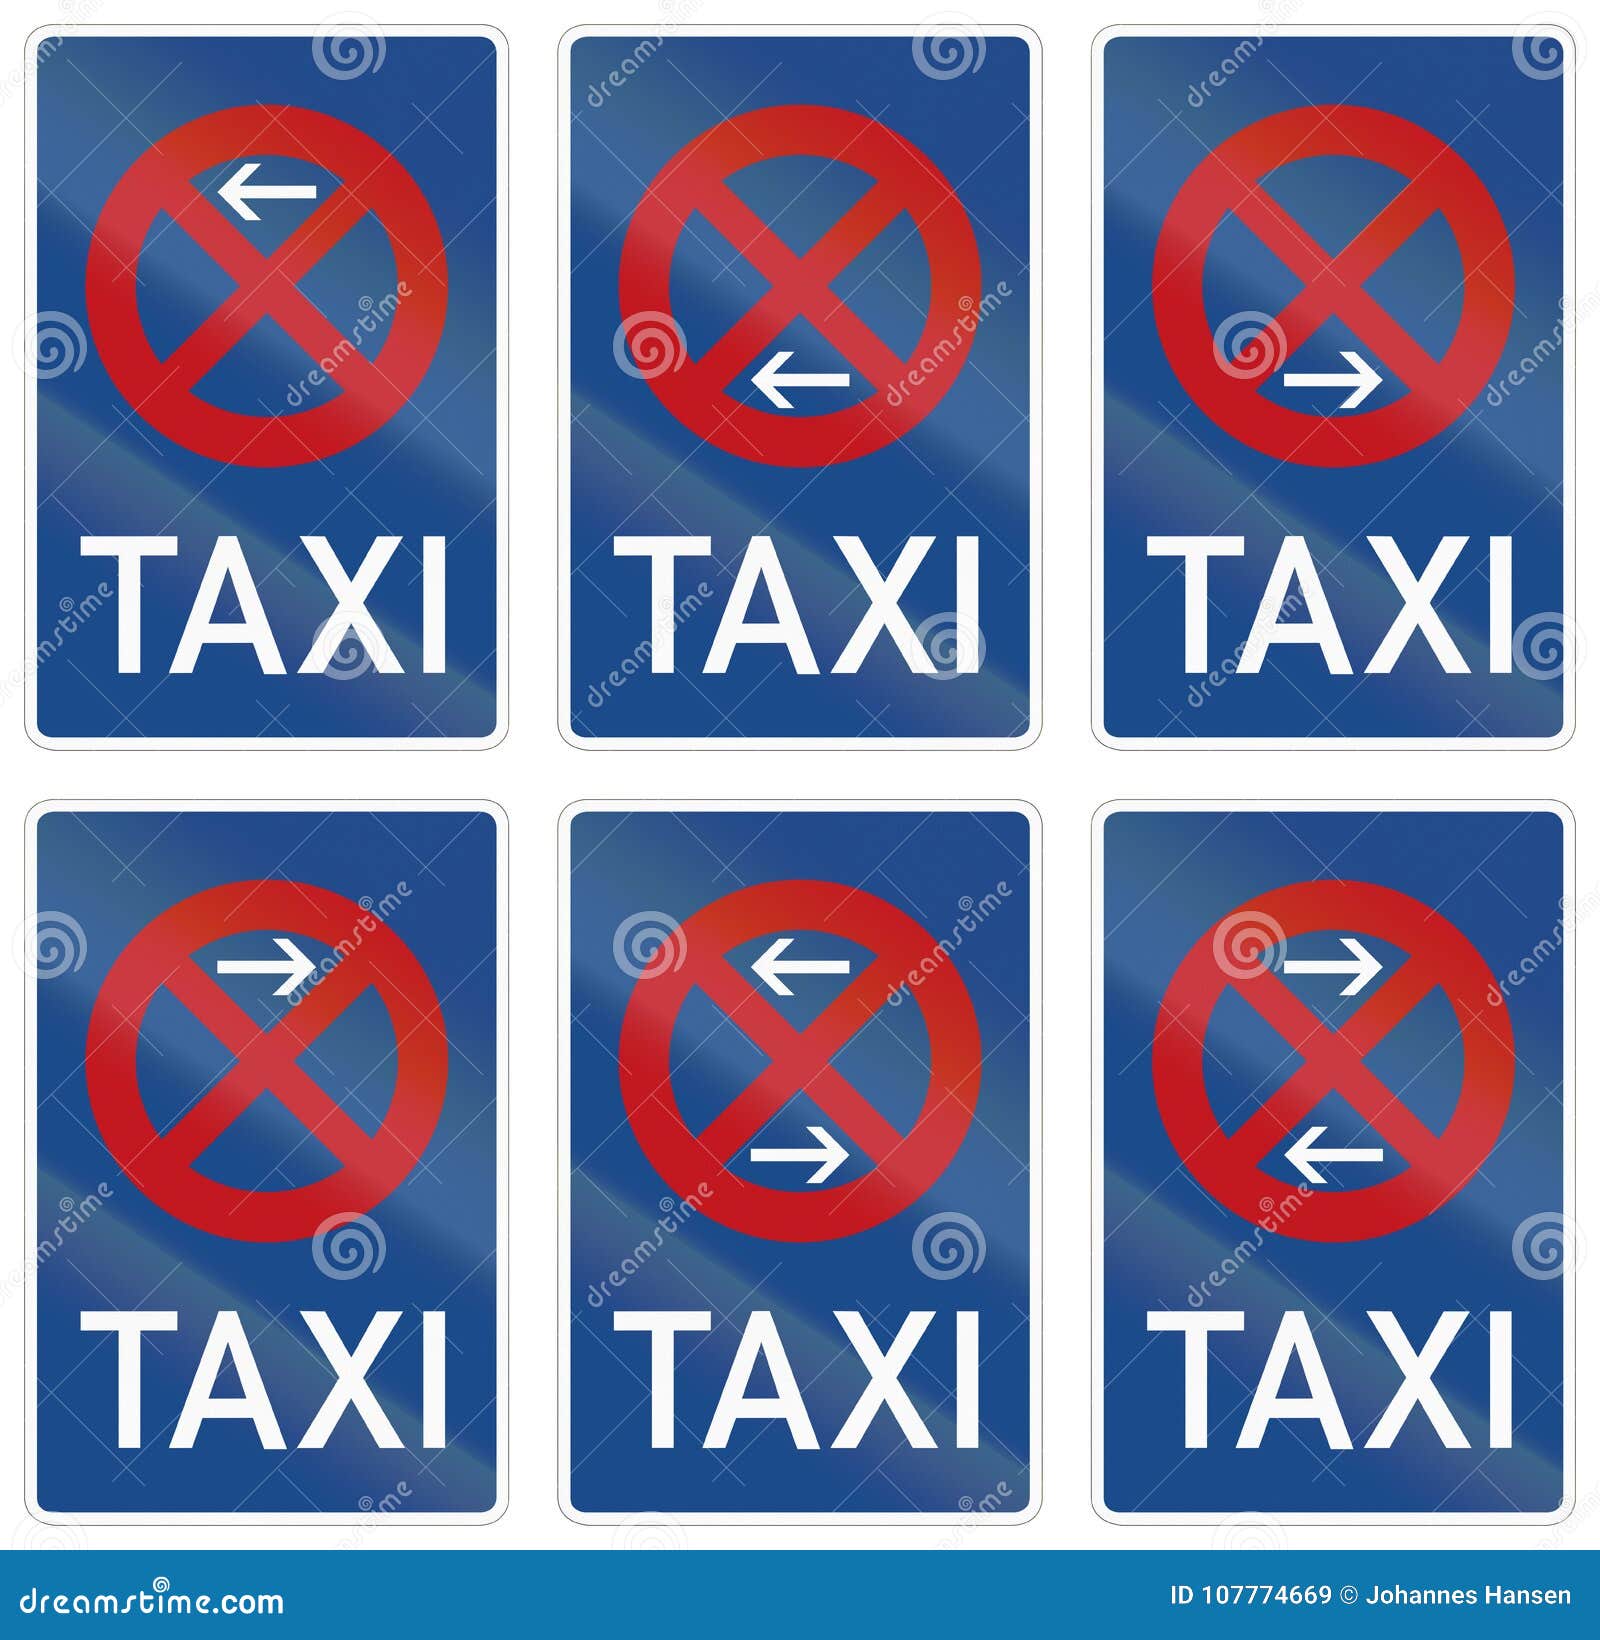 Остановка запрещена такси. Стоянка такси запрещена. Знак стоянка такси. Знак такси на парковке. Распечатать стоянка такси запрещена.